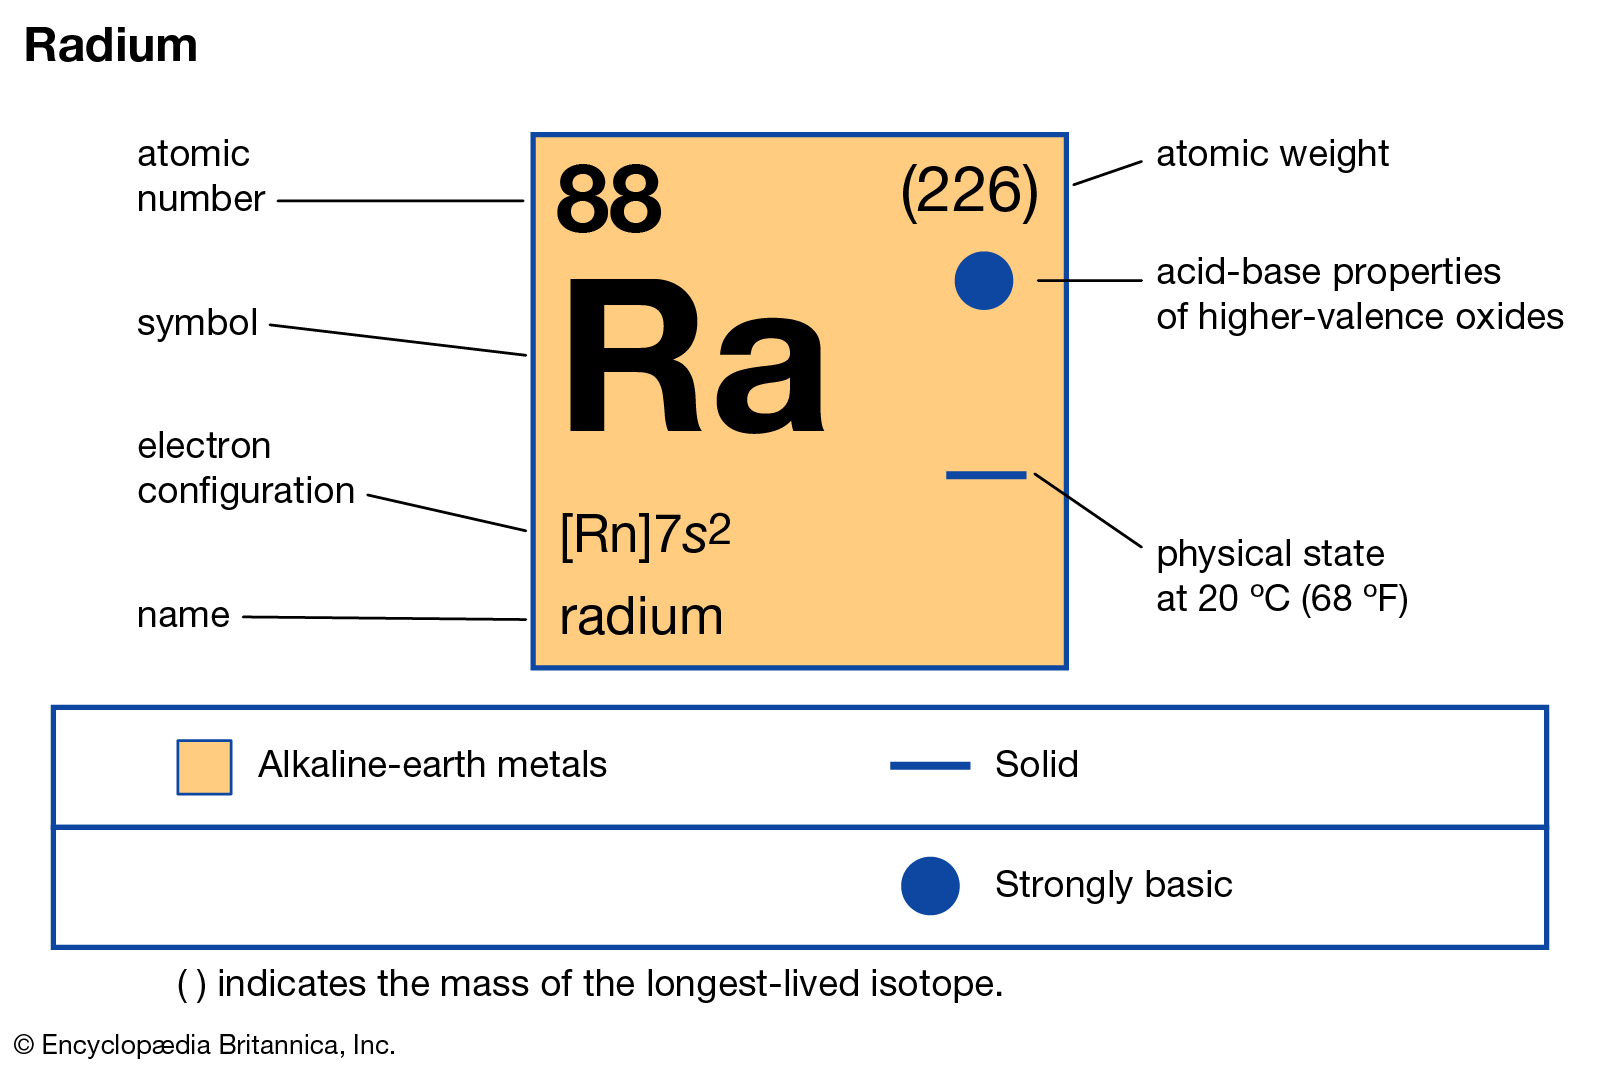 What is radium